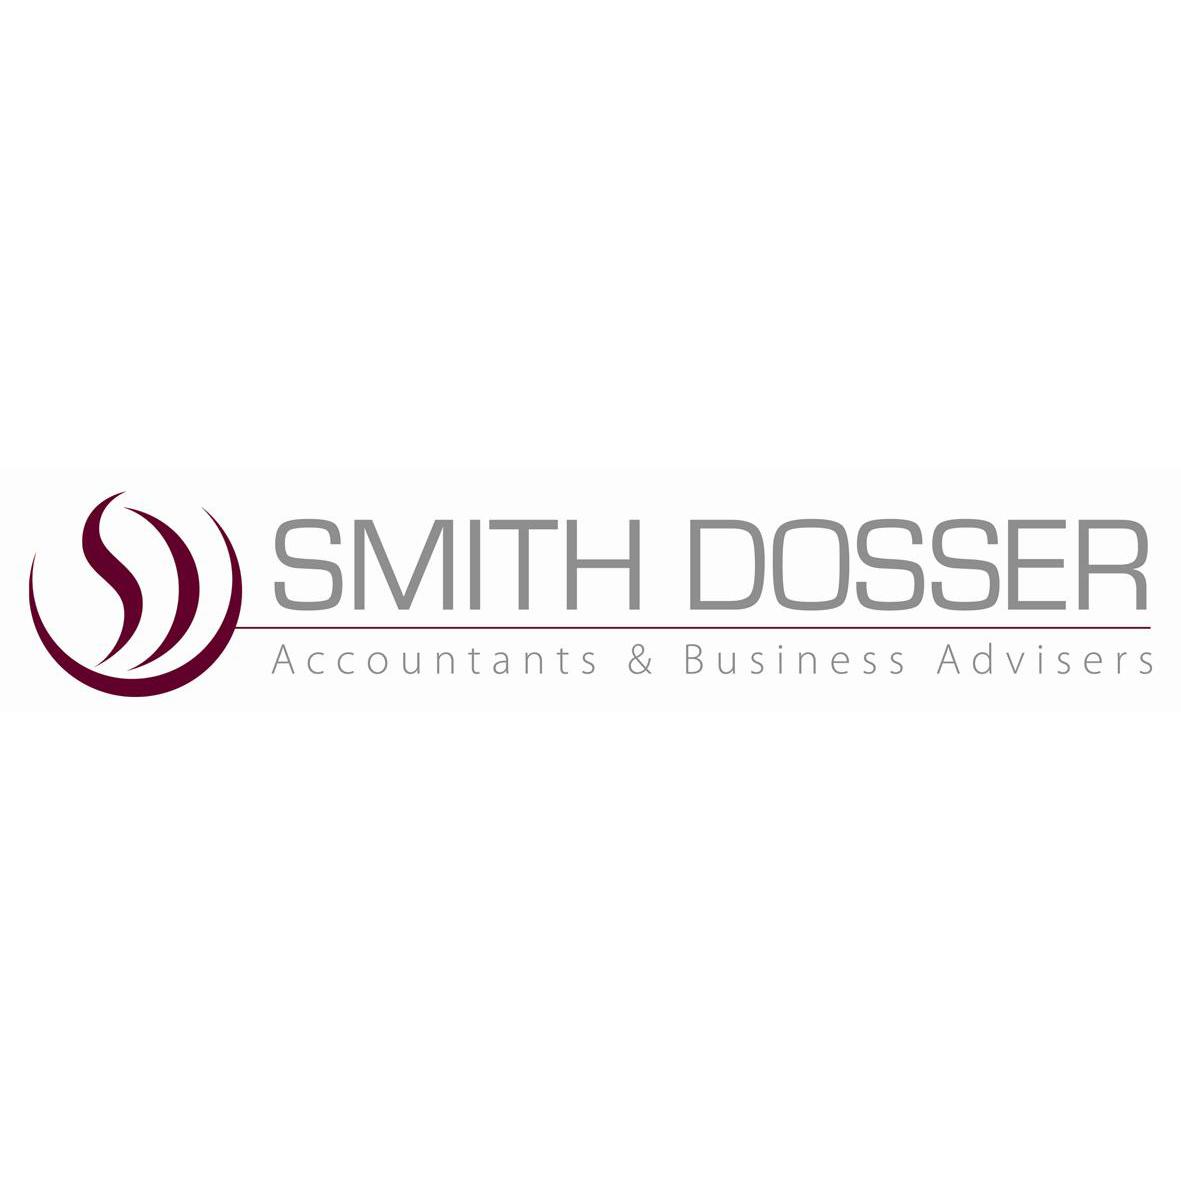 Smith Dosser - Benalla, VIC 3672 - (03) 5762 1588 | ShowMeLocal.com